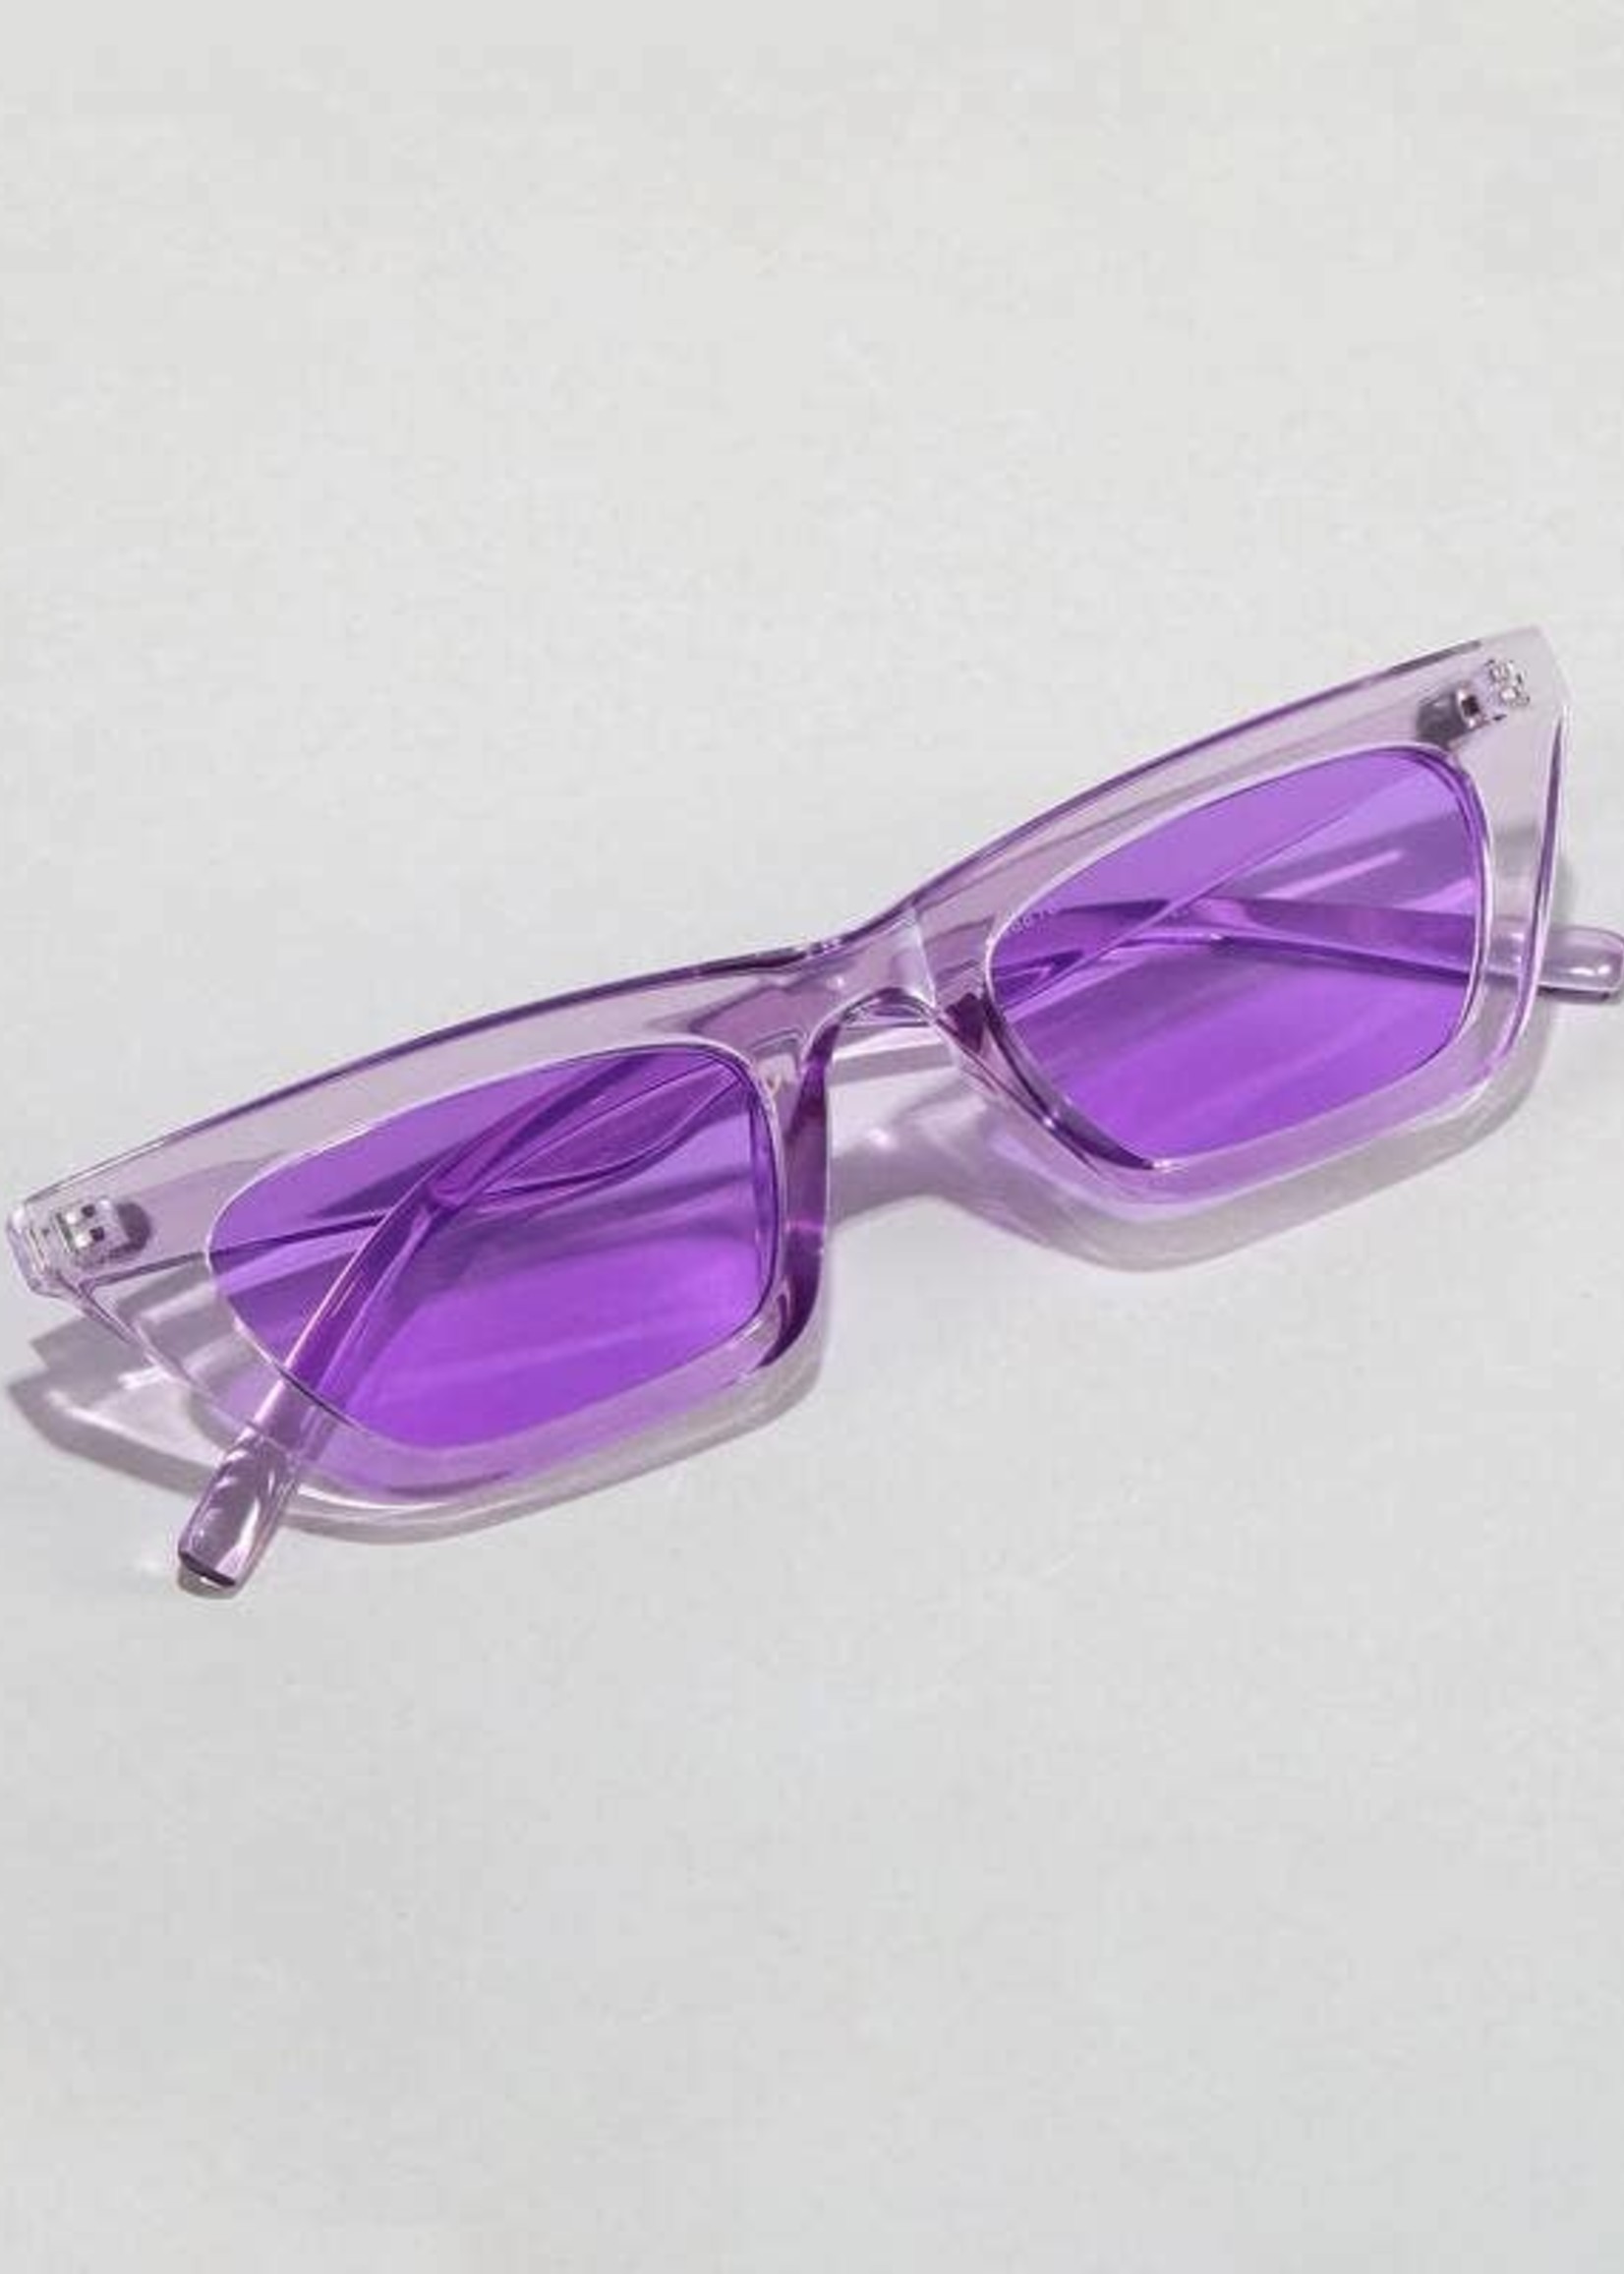 Lavender Cat Glasses